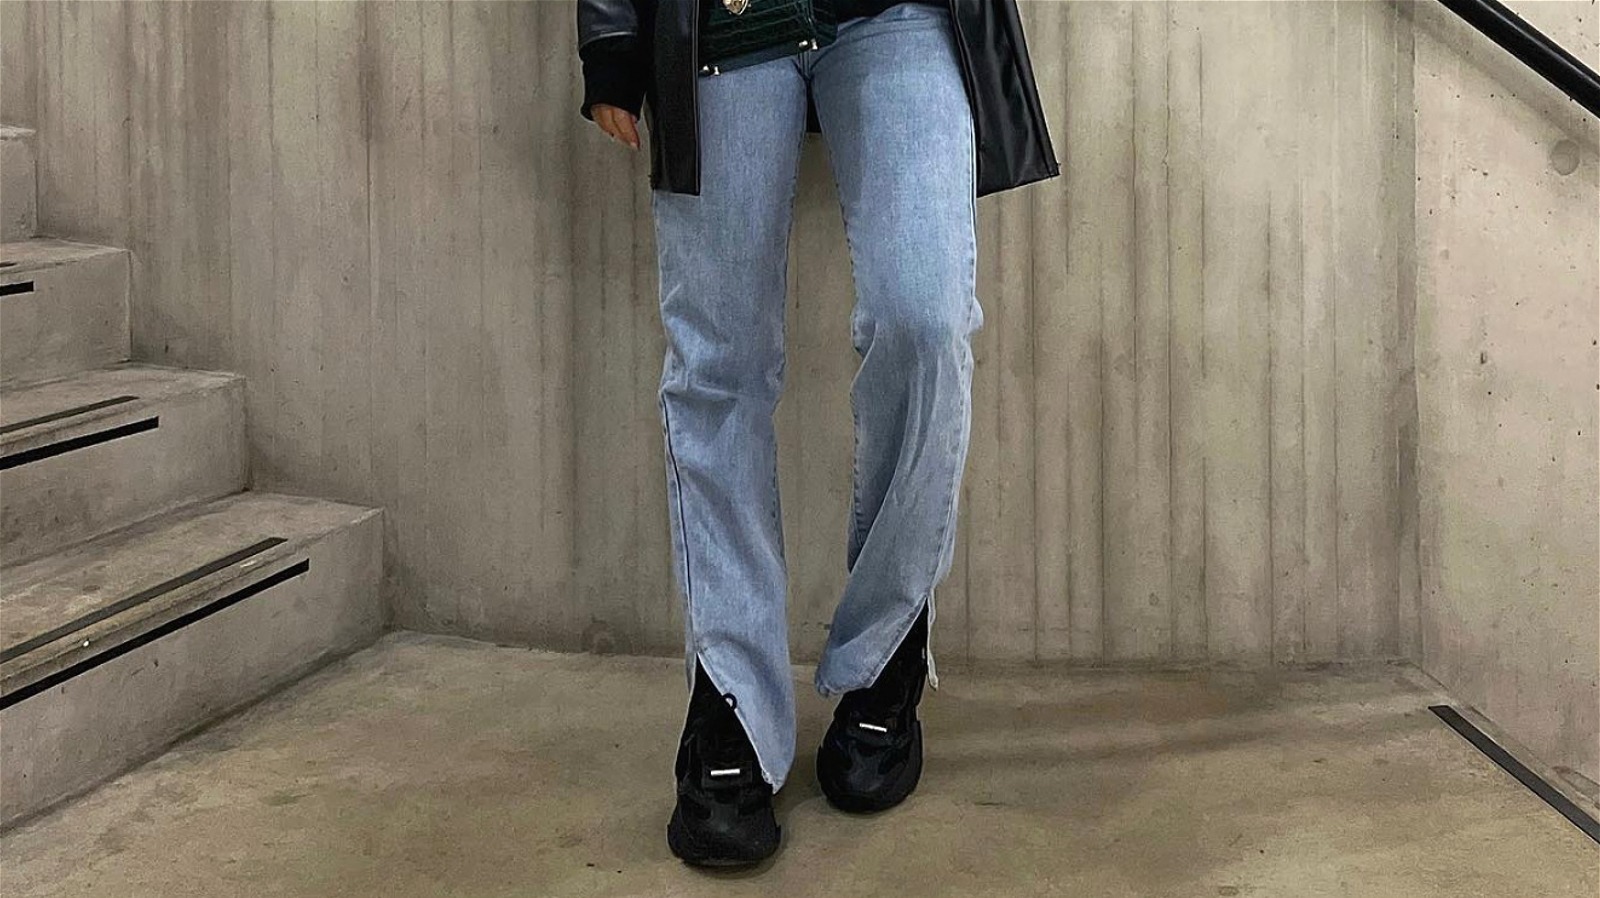 https://www.glam.com/img/gallery/our-6-favorite-ways-to-style-trendy-split-hem-jeans/l-intro-1679003063.jpg